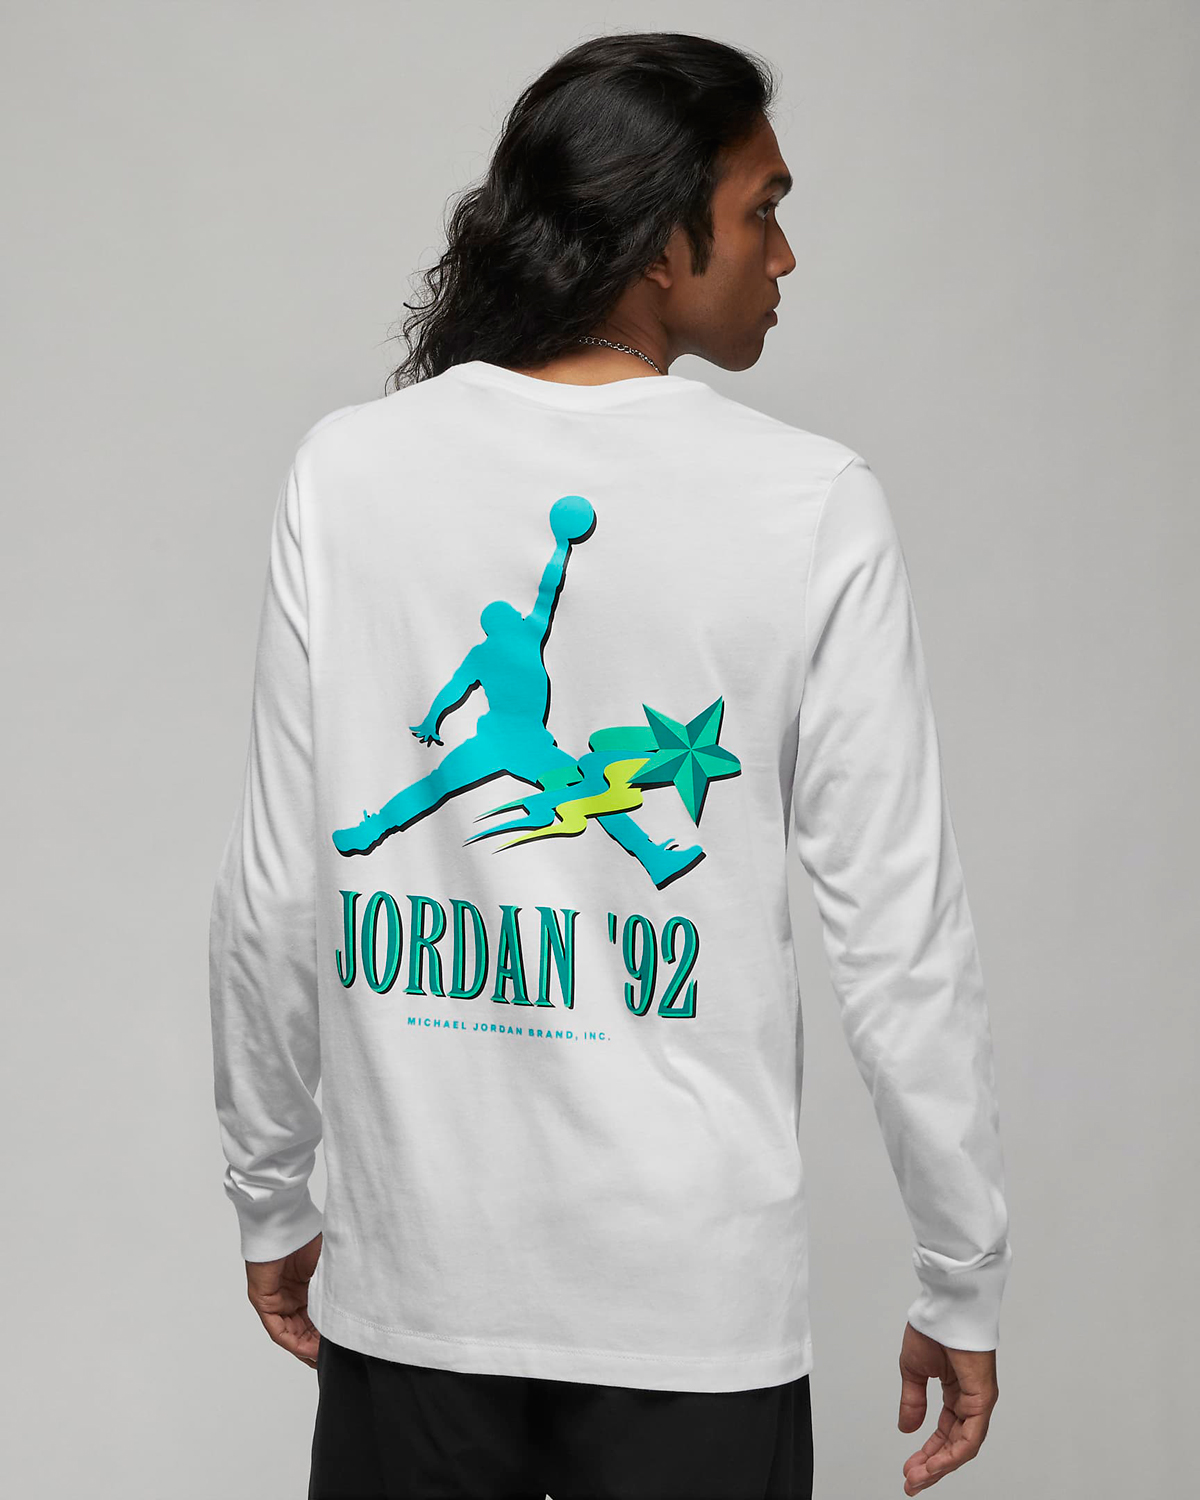 Jordan-92-Long-Sleeve-T-Shirt-White-Turquoise-2